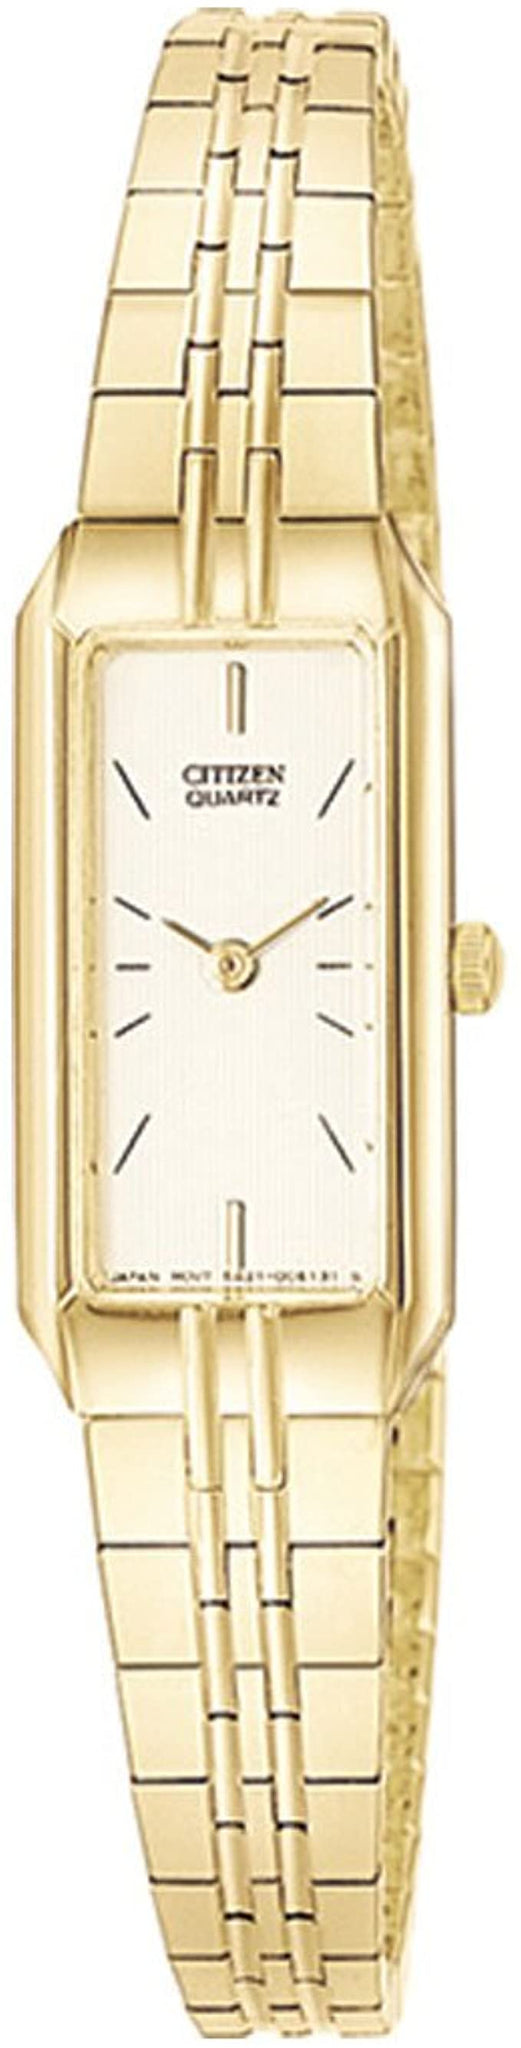 Citizen Women's EH3312-55A Gold-Tone Stainless Steel Bracelet Watch